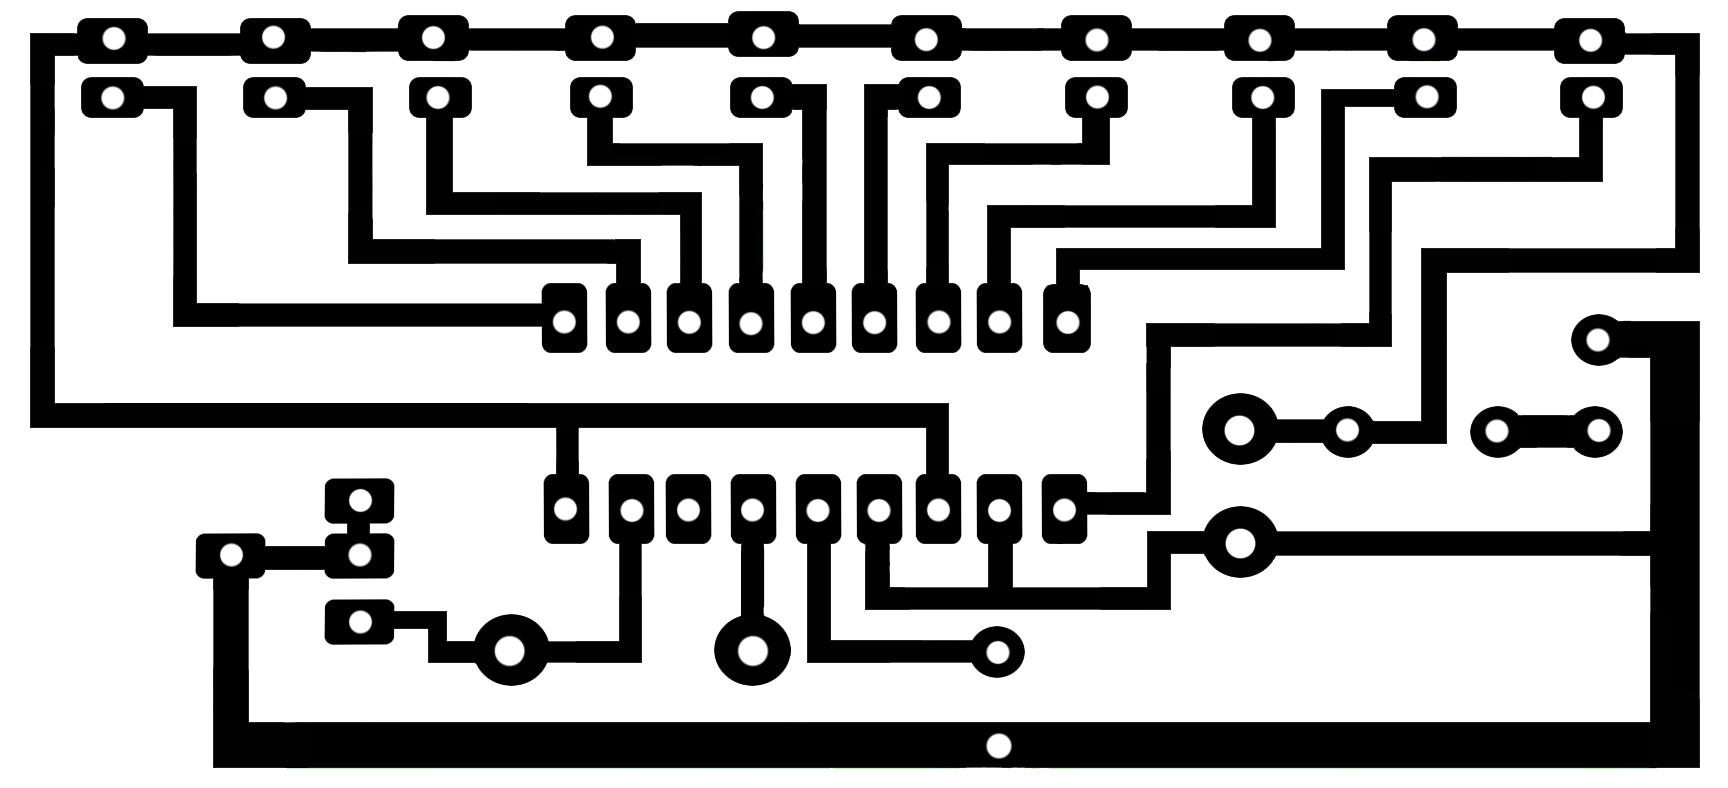 led music level indicator circuit diagram